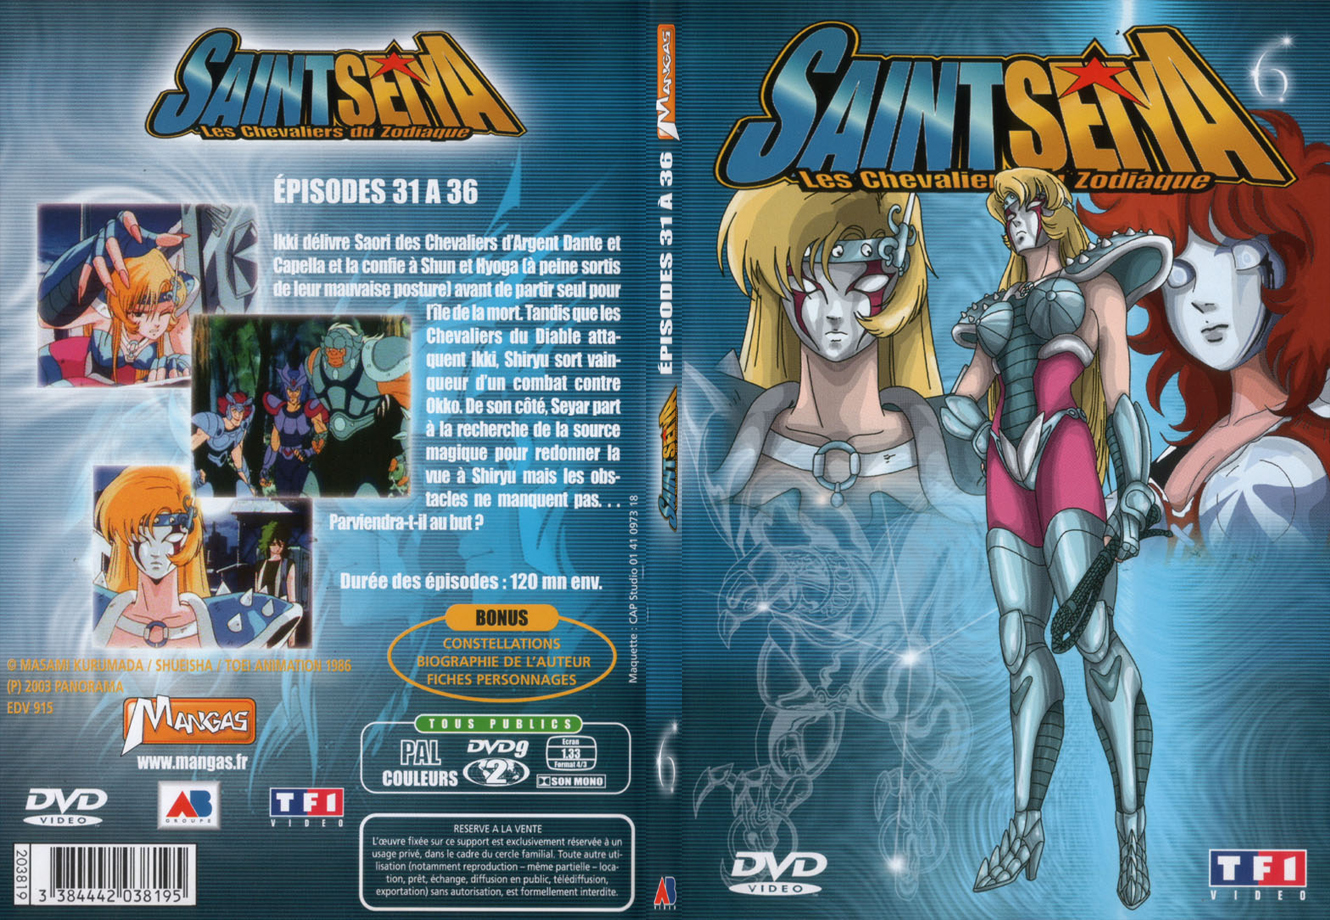 Jaquette DVD Saint Seiya vol 06 - SLIM